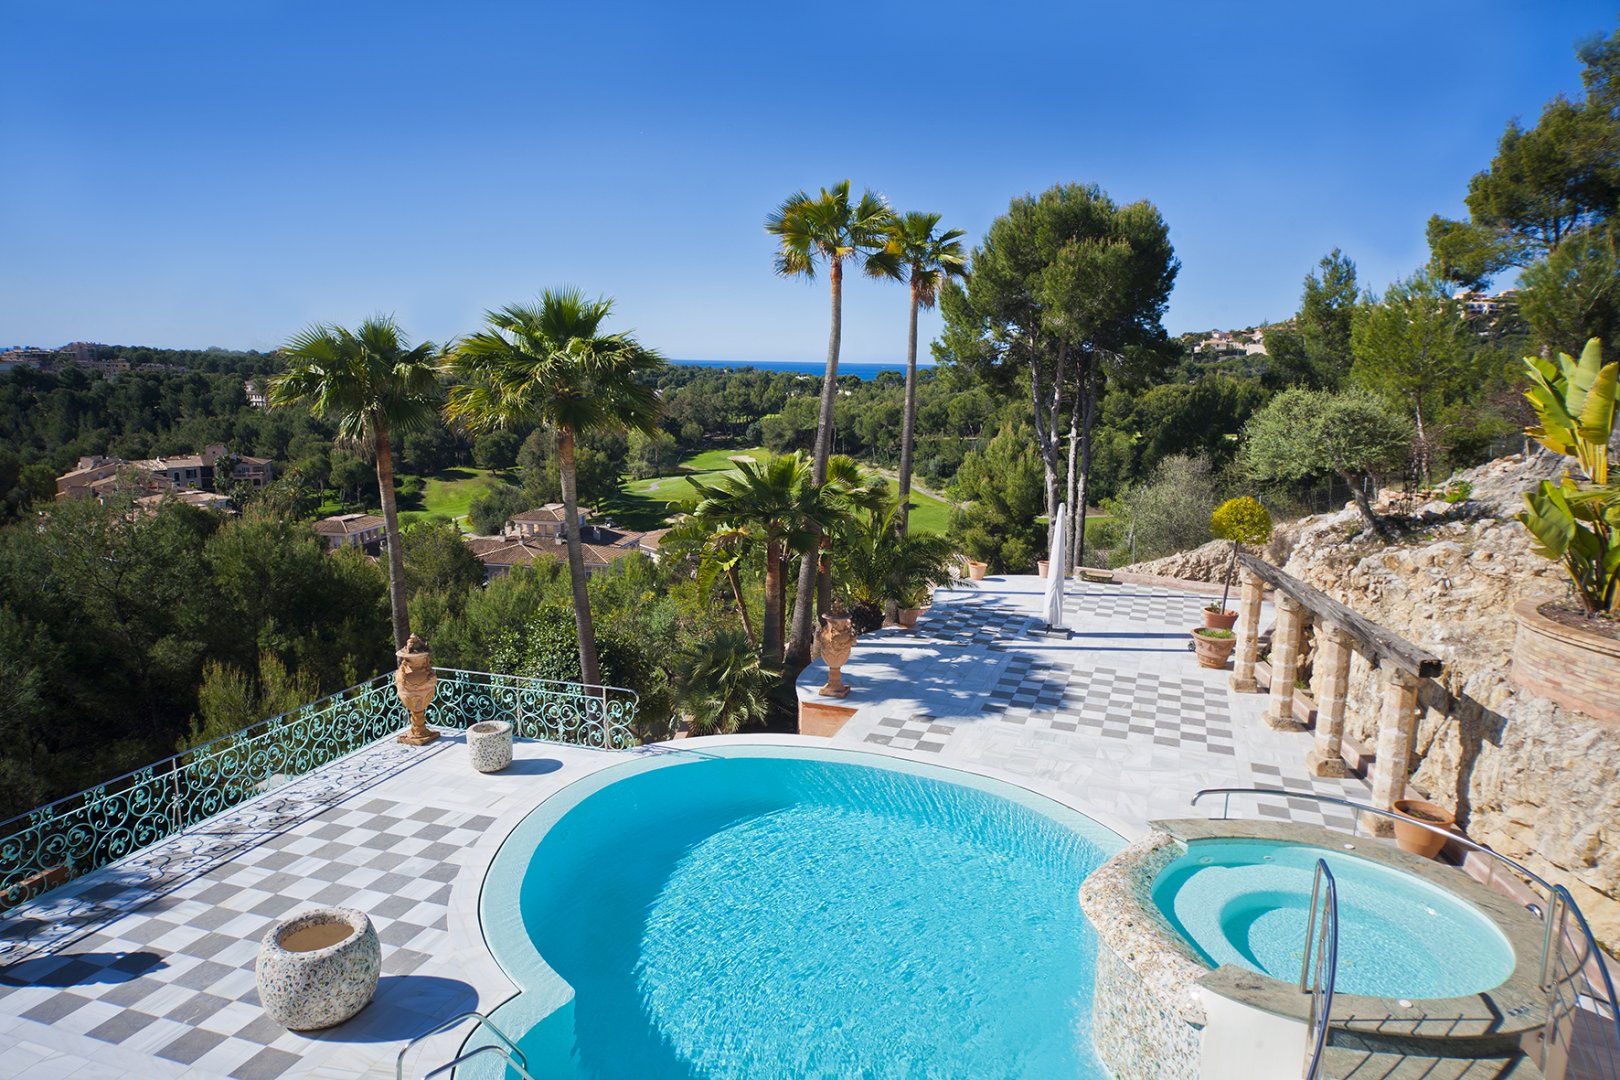 Luxury villa rental in Mallorca with pool - House Mallorca - House Mallorca